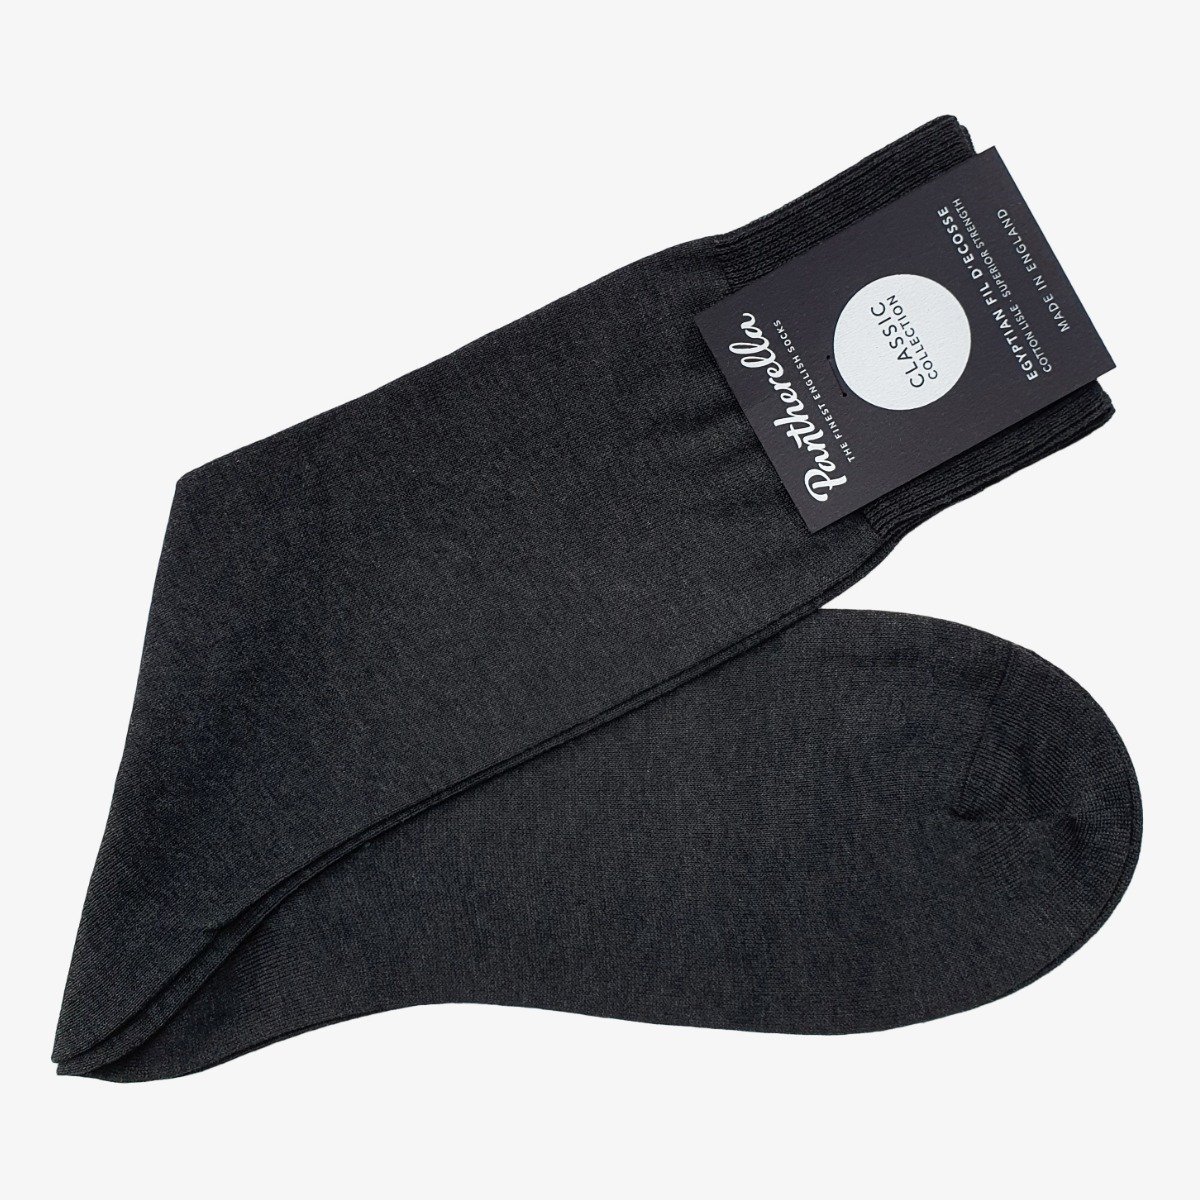 Pantherella Sackville dark grey cotton mid-calf socks